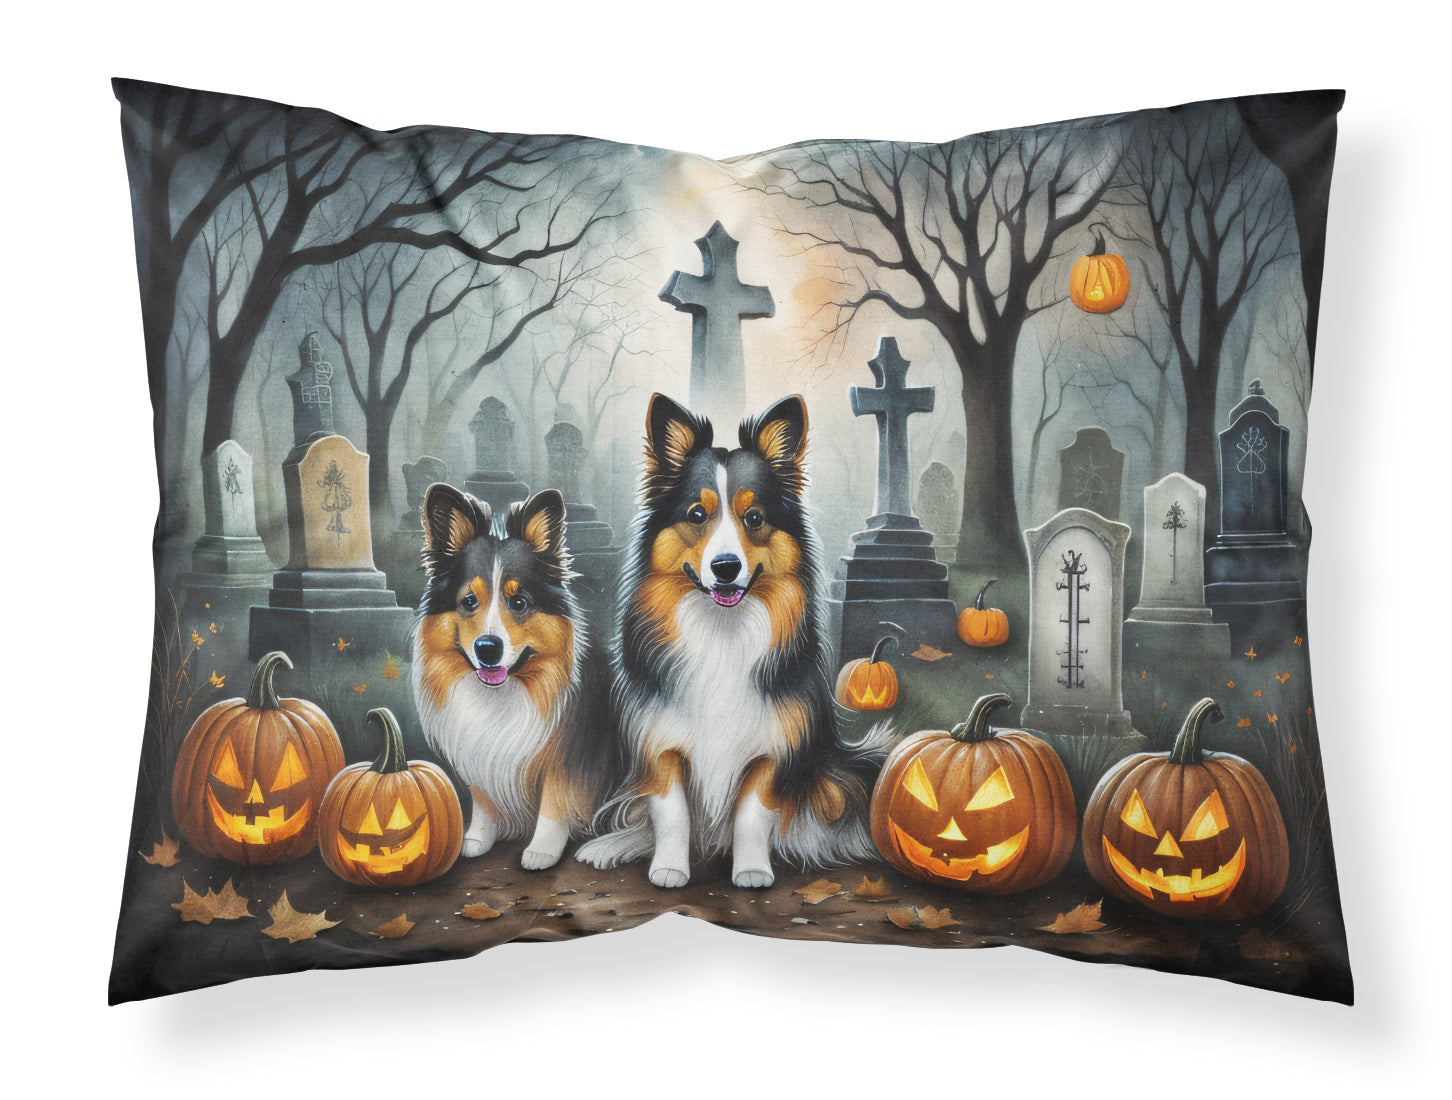 Buy this Sheltie Spooky Halloween Fabric Standard Pillowcase